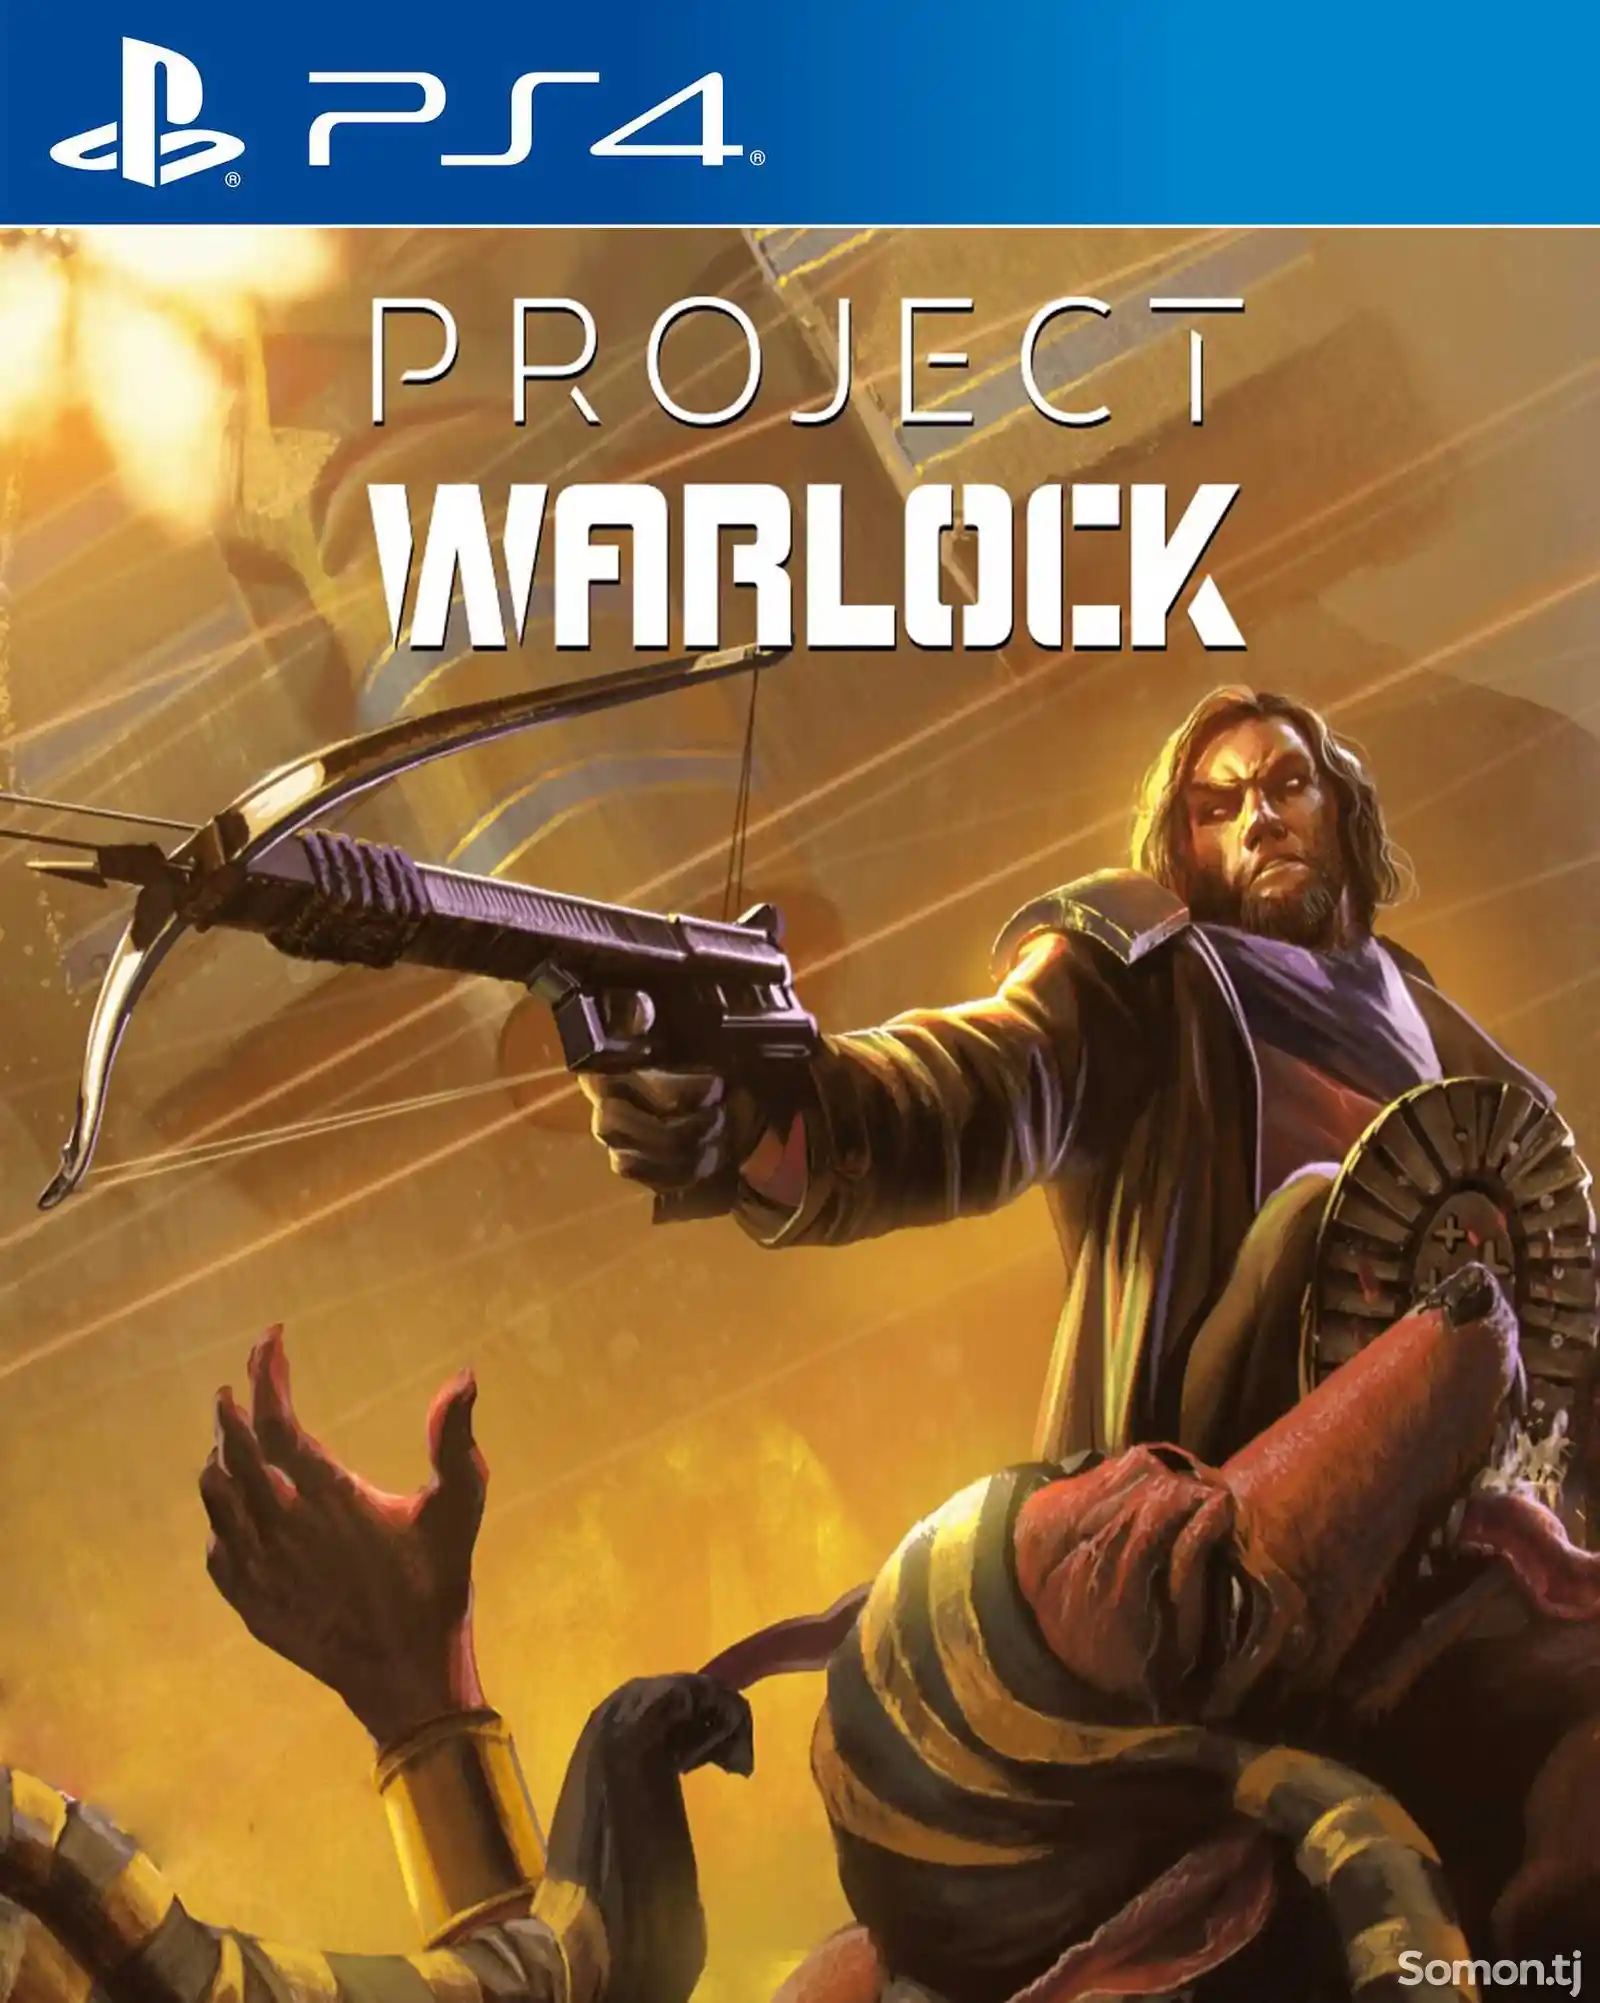 Игра Project warlock для PS-4 / 5.05 / 6.72 / 7.02 / 7.55 / 9.00 /-1